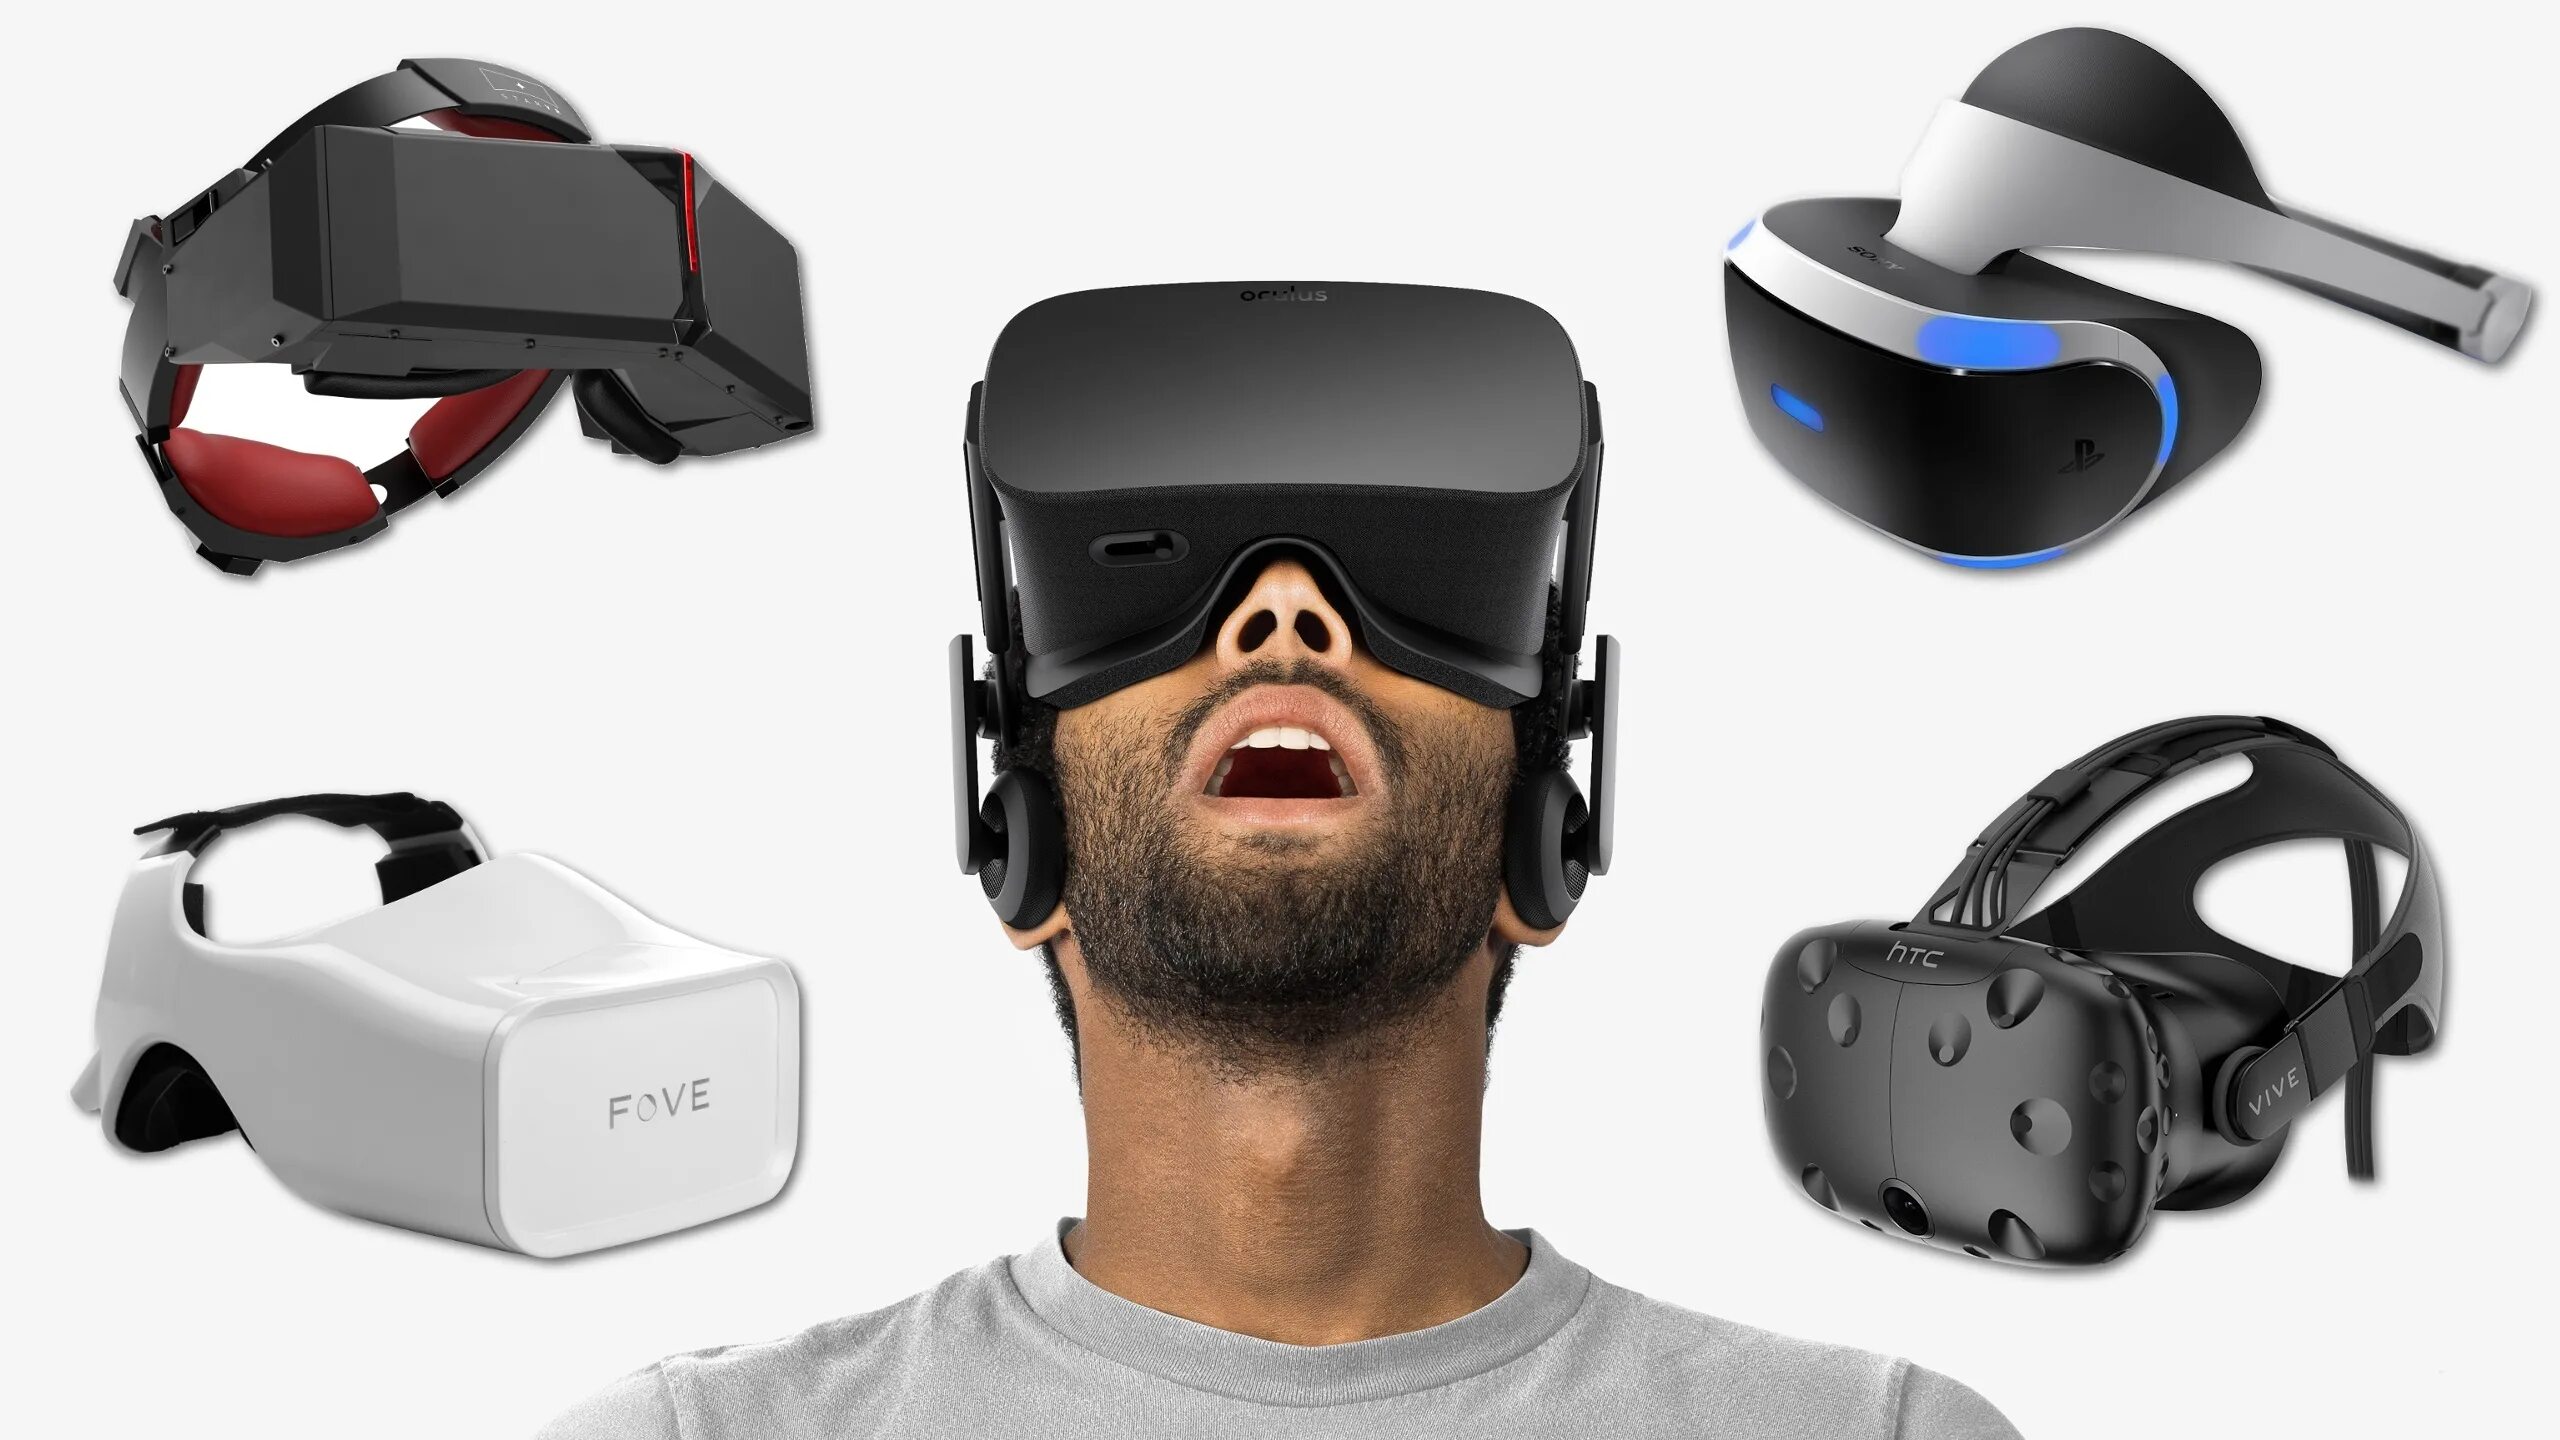 Vr очки шлемы. VR очки HTC Vive. Sony PLAYSTATION VR HTC Vive Oculus Rift VR. VR очки Vive Pro 2 весь комплект. PS VR 2 очки виртуальной реальности.